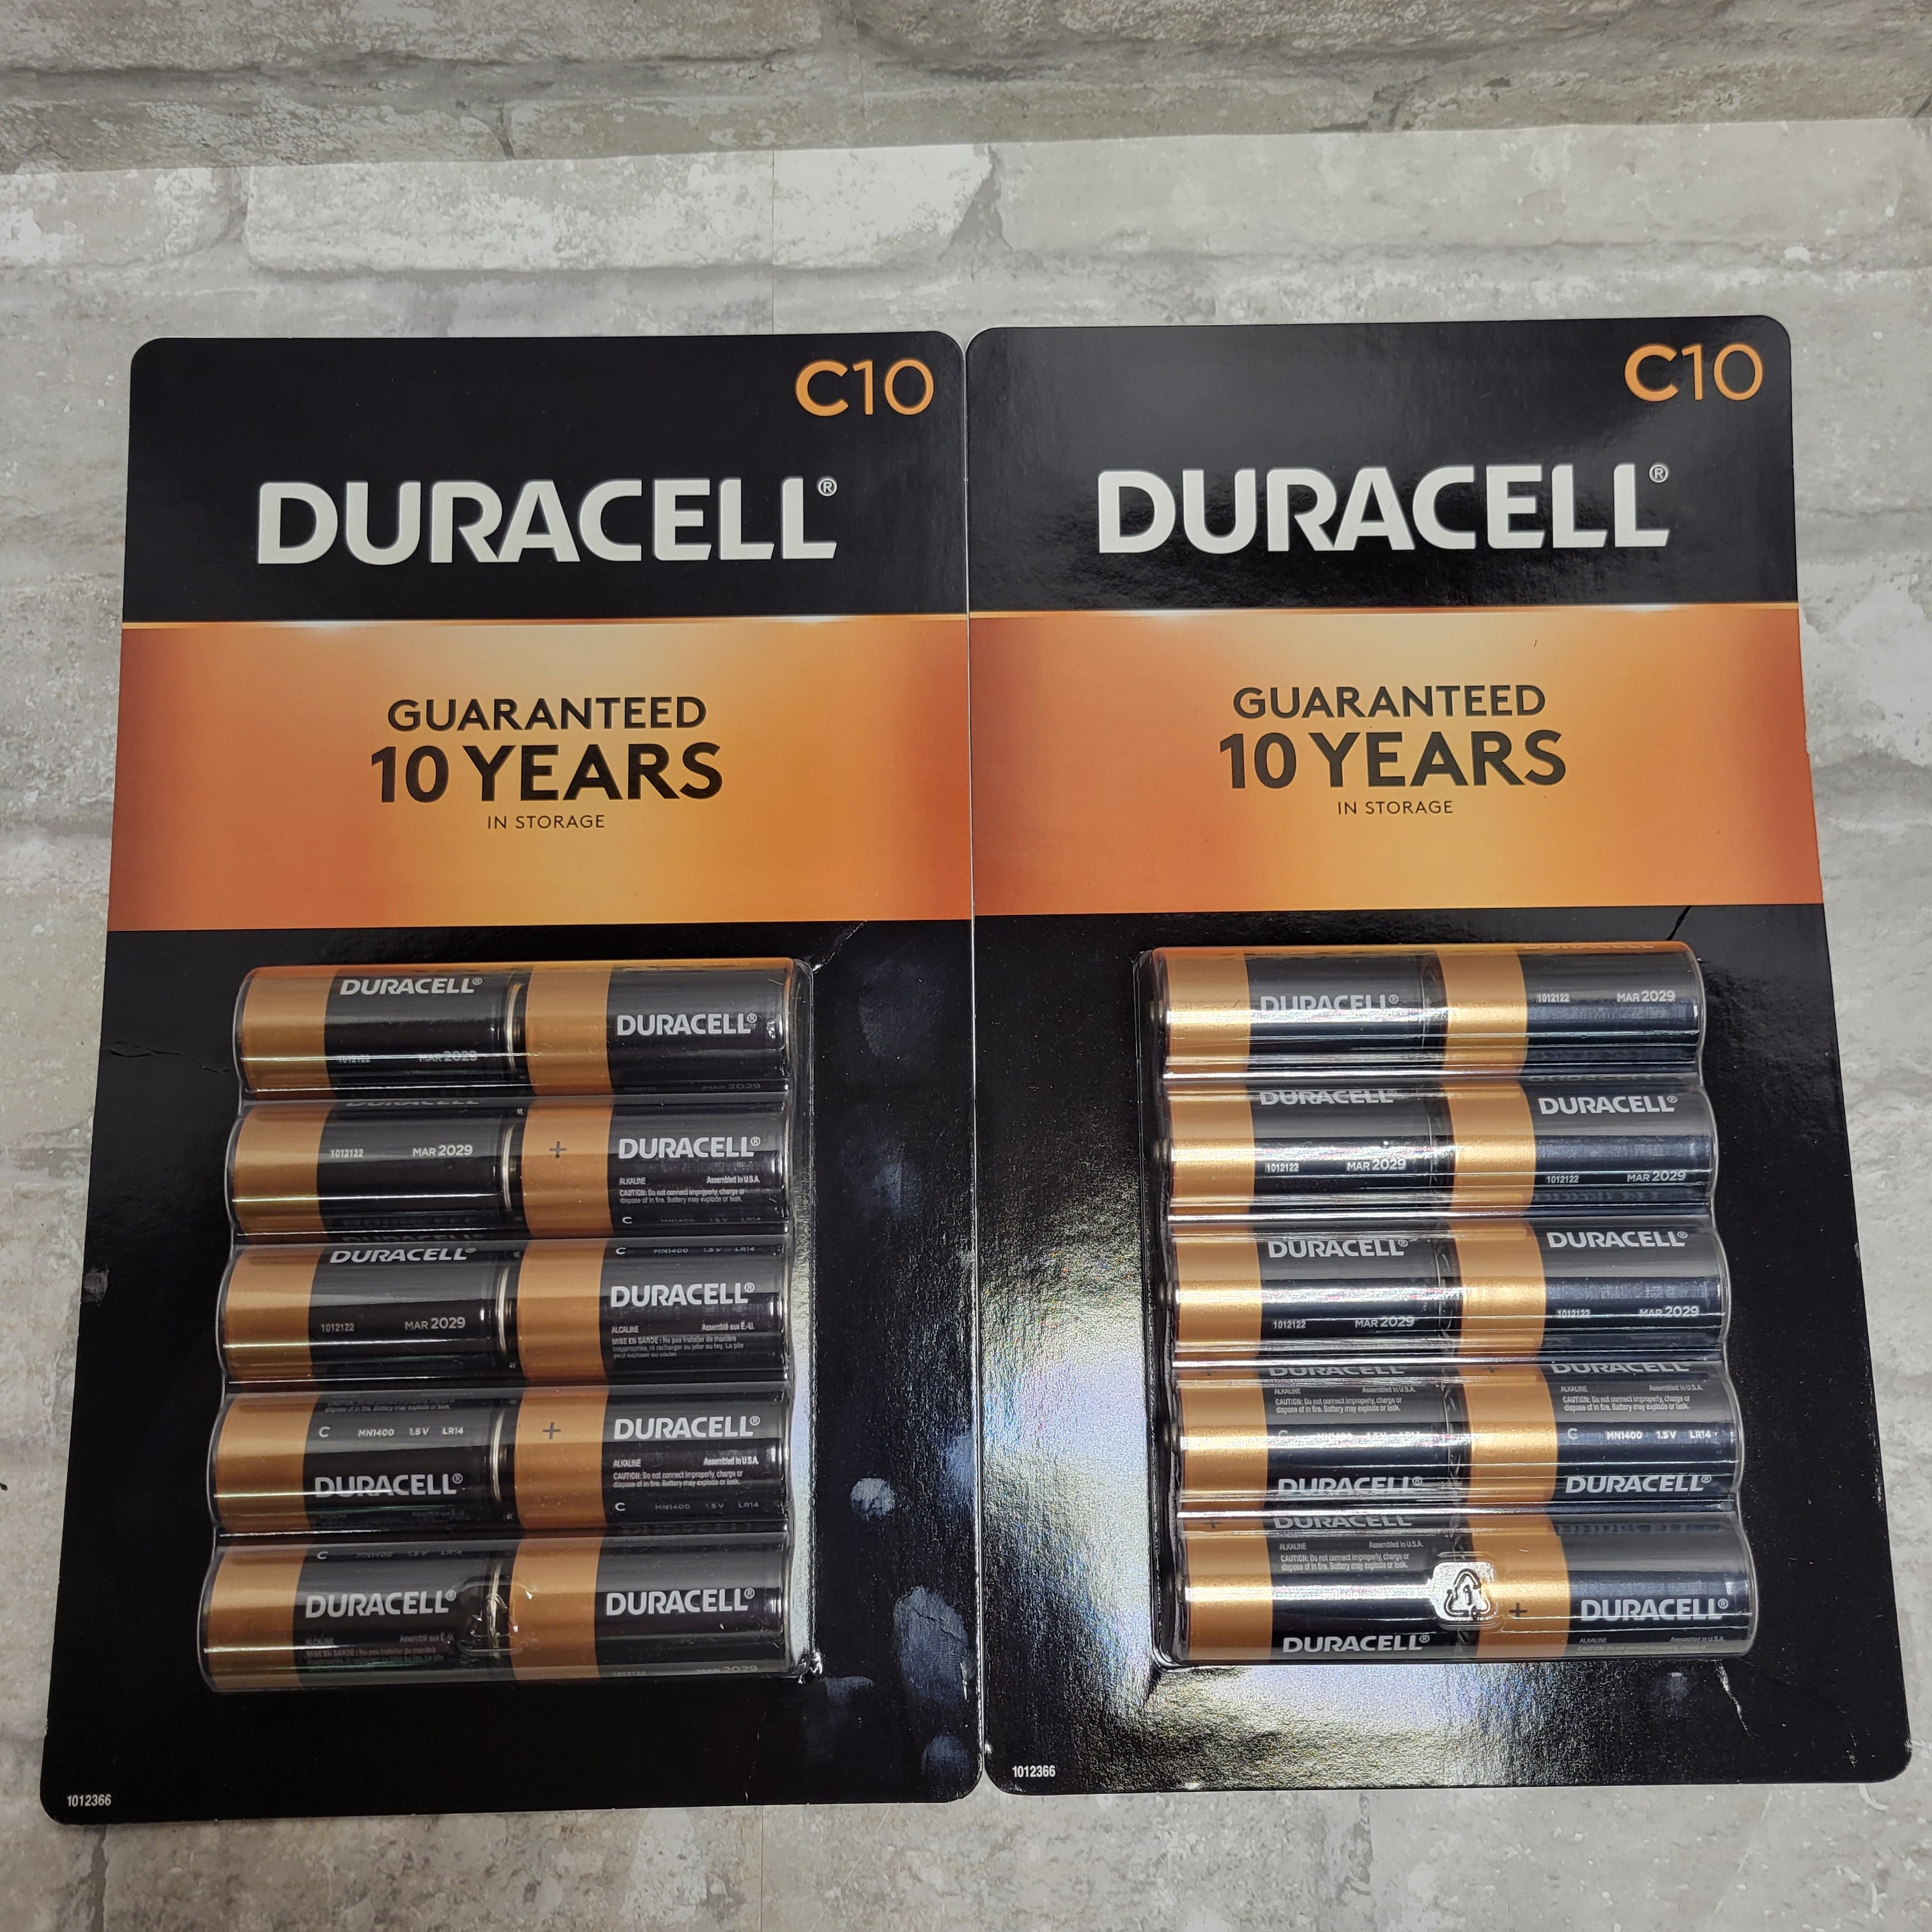 DURACELL 80240709 Coppertop Alkaline Batteries C - 10 pk, Lot of 2 (8133090181358)